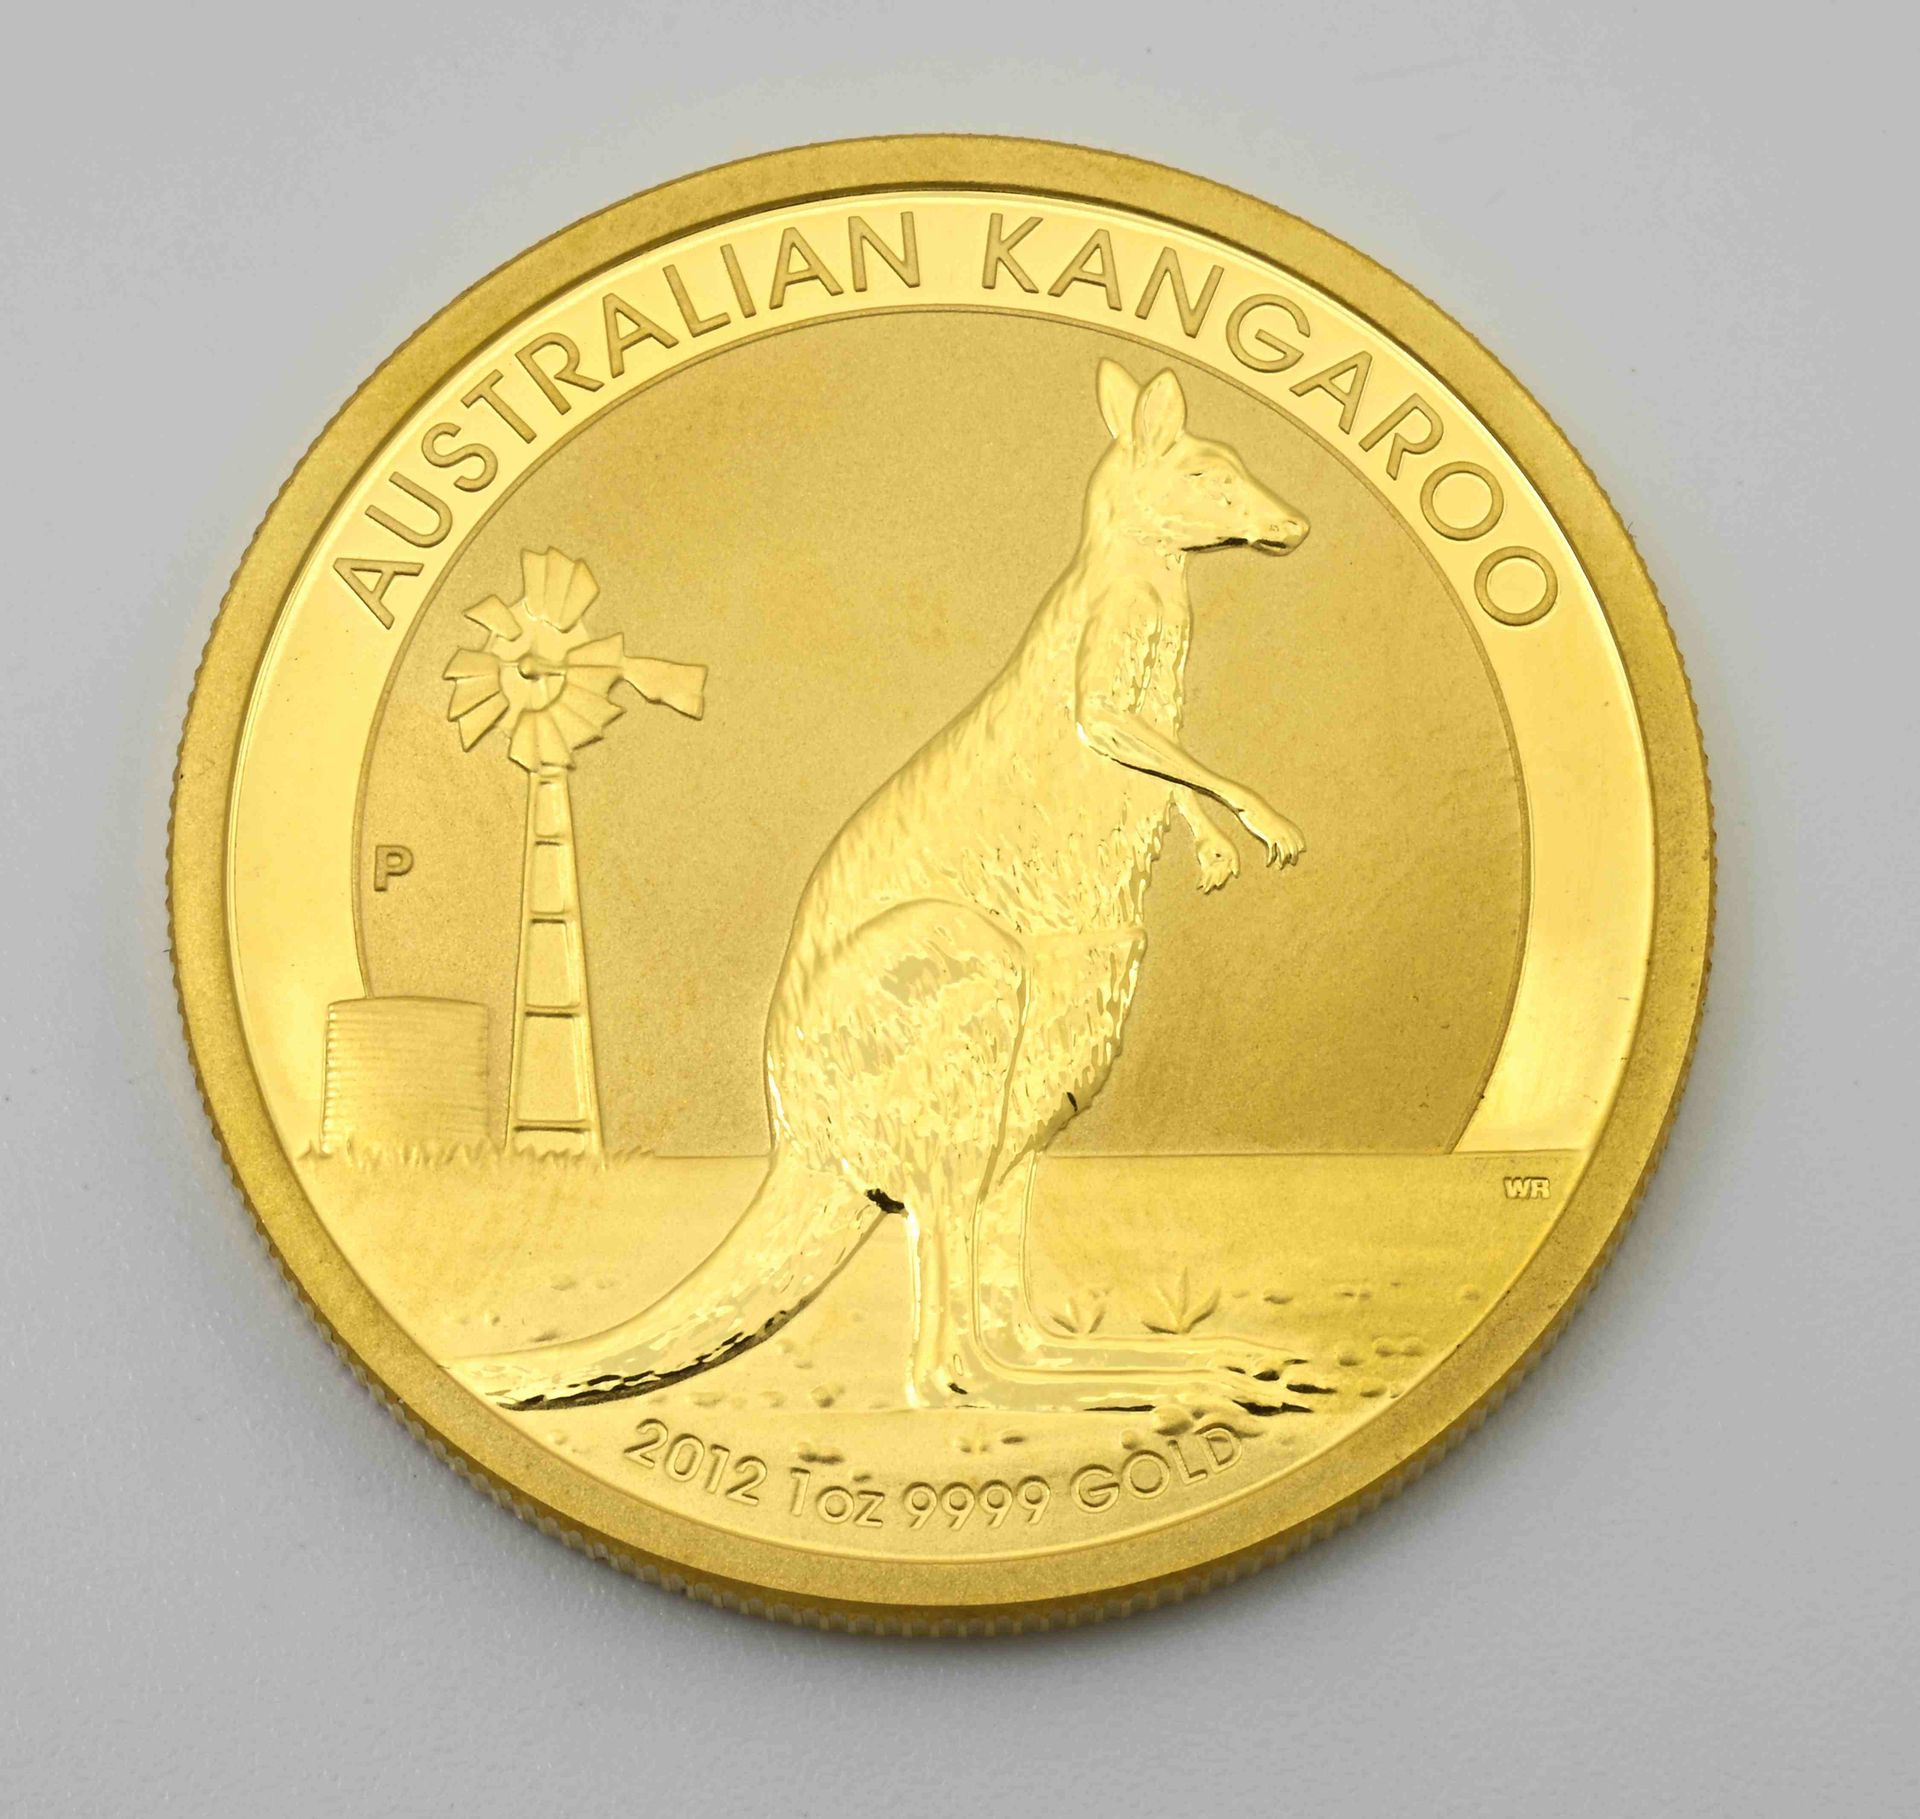 Null Australian Nugget. 100-Dollar-Münze Perth Australia,
eine Unze Feingold 999&hellip;